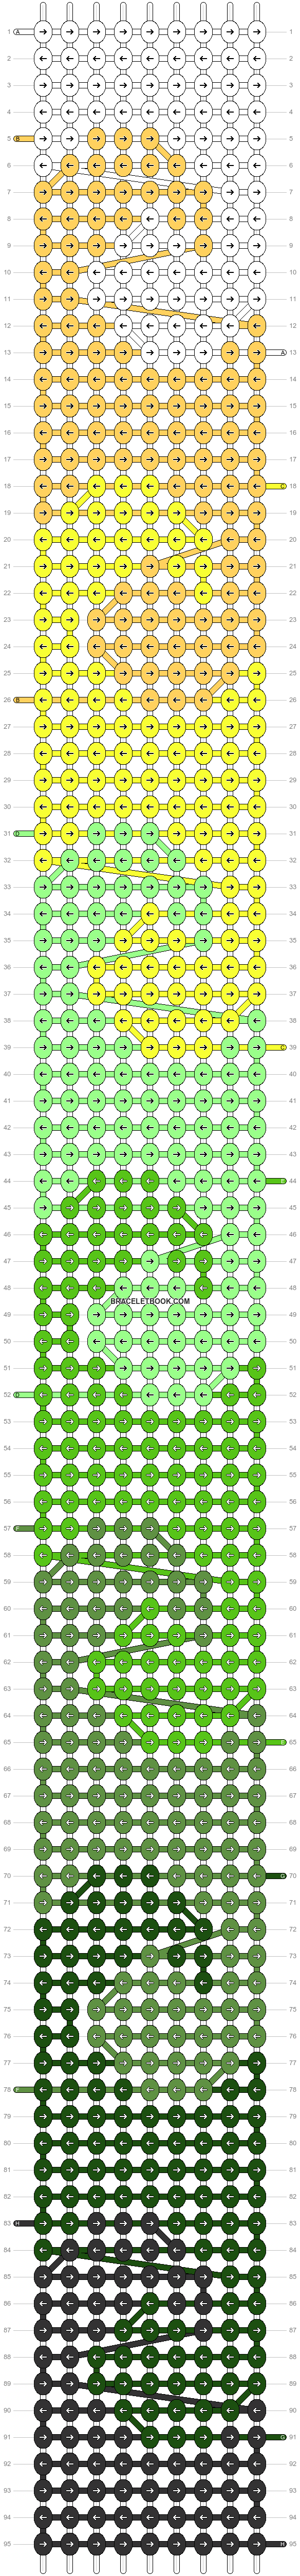 Alpha pattern #23860 variation #59828 pattern